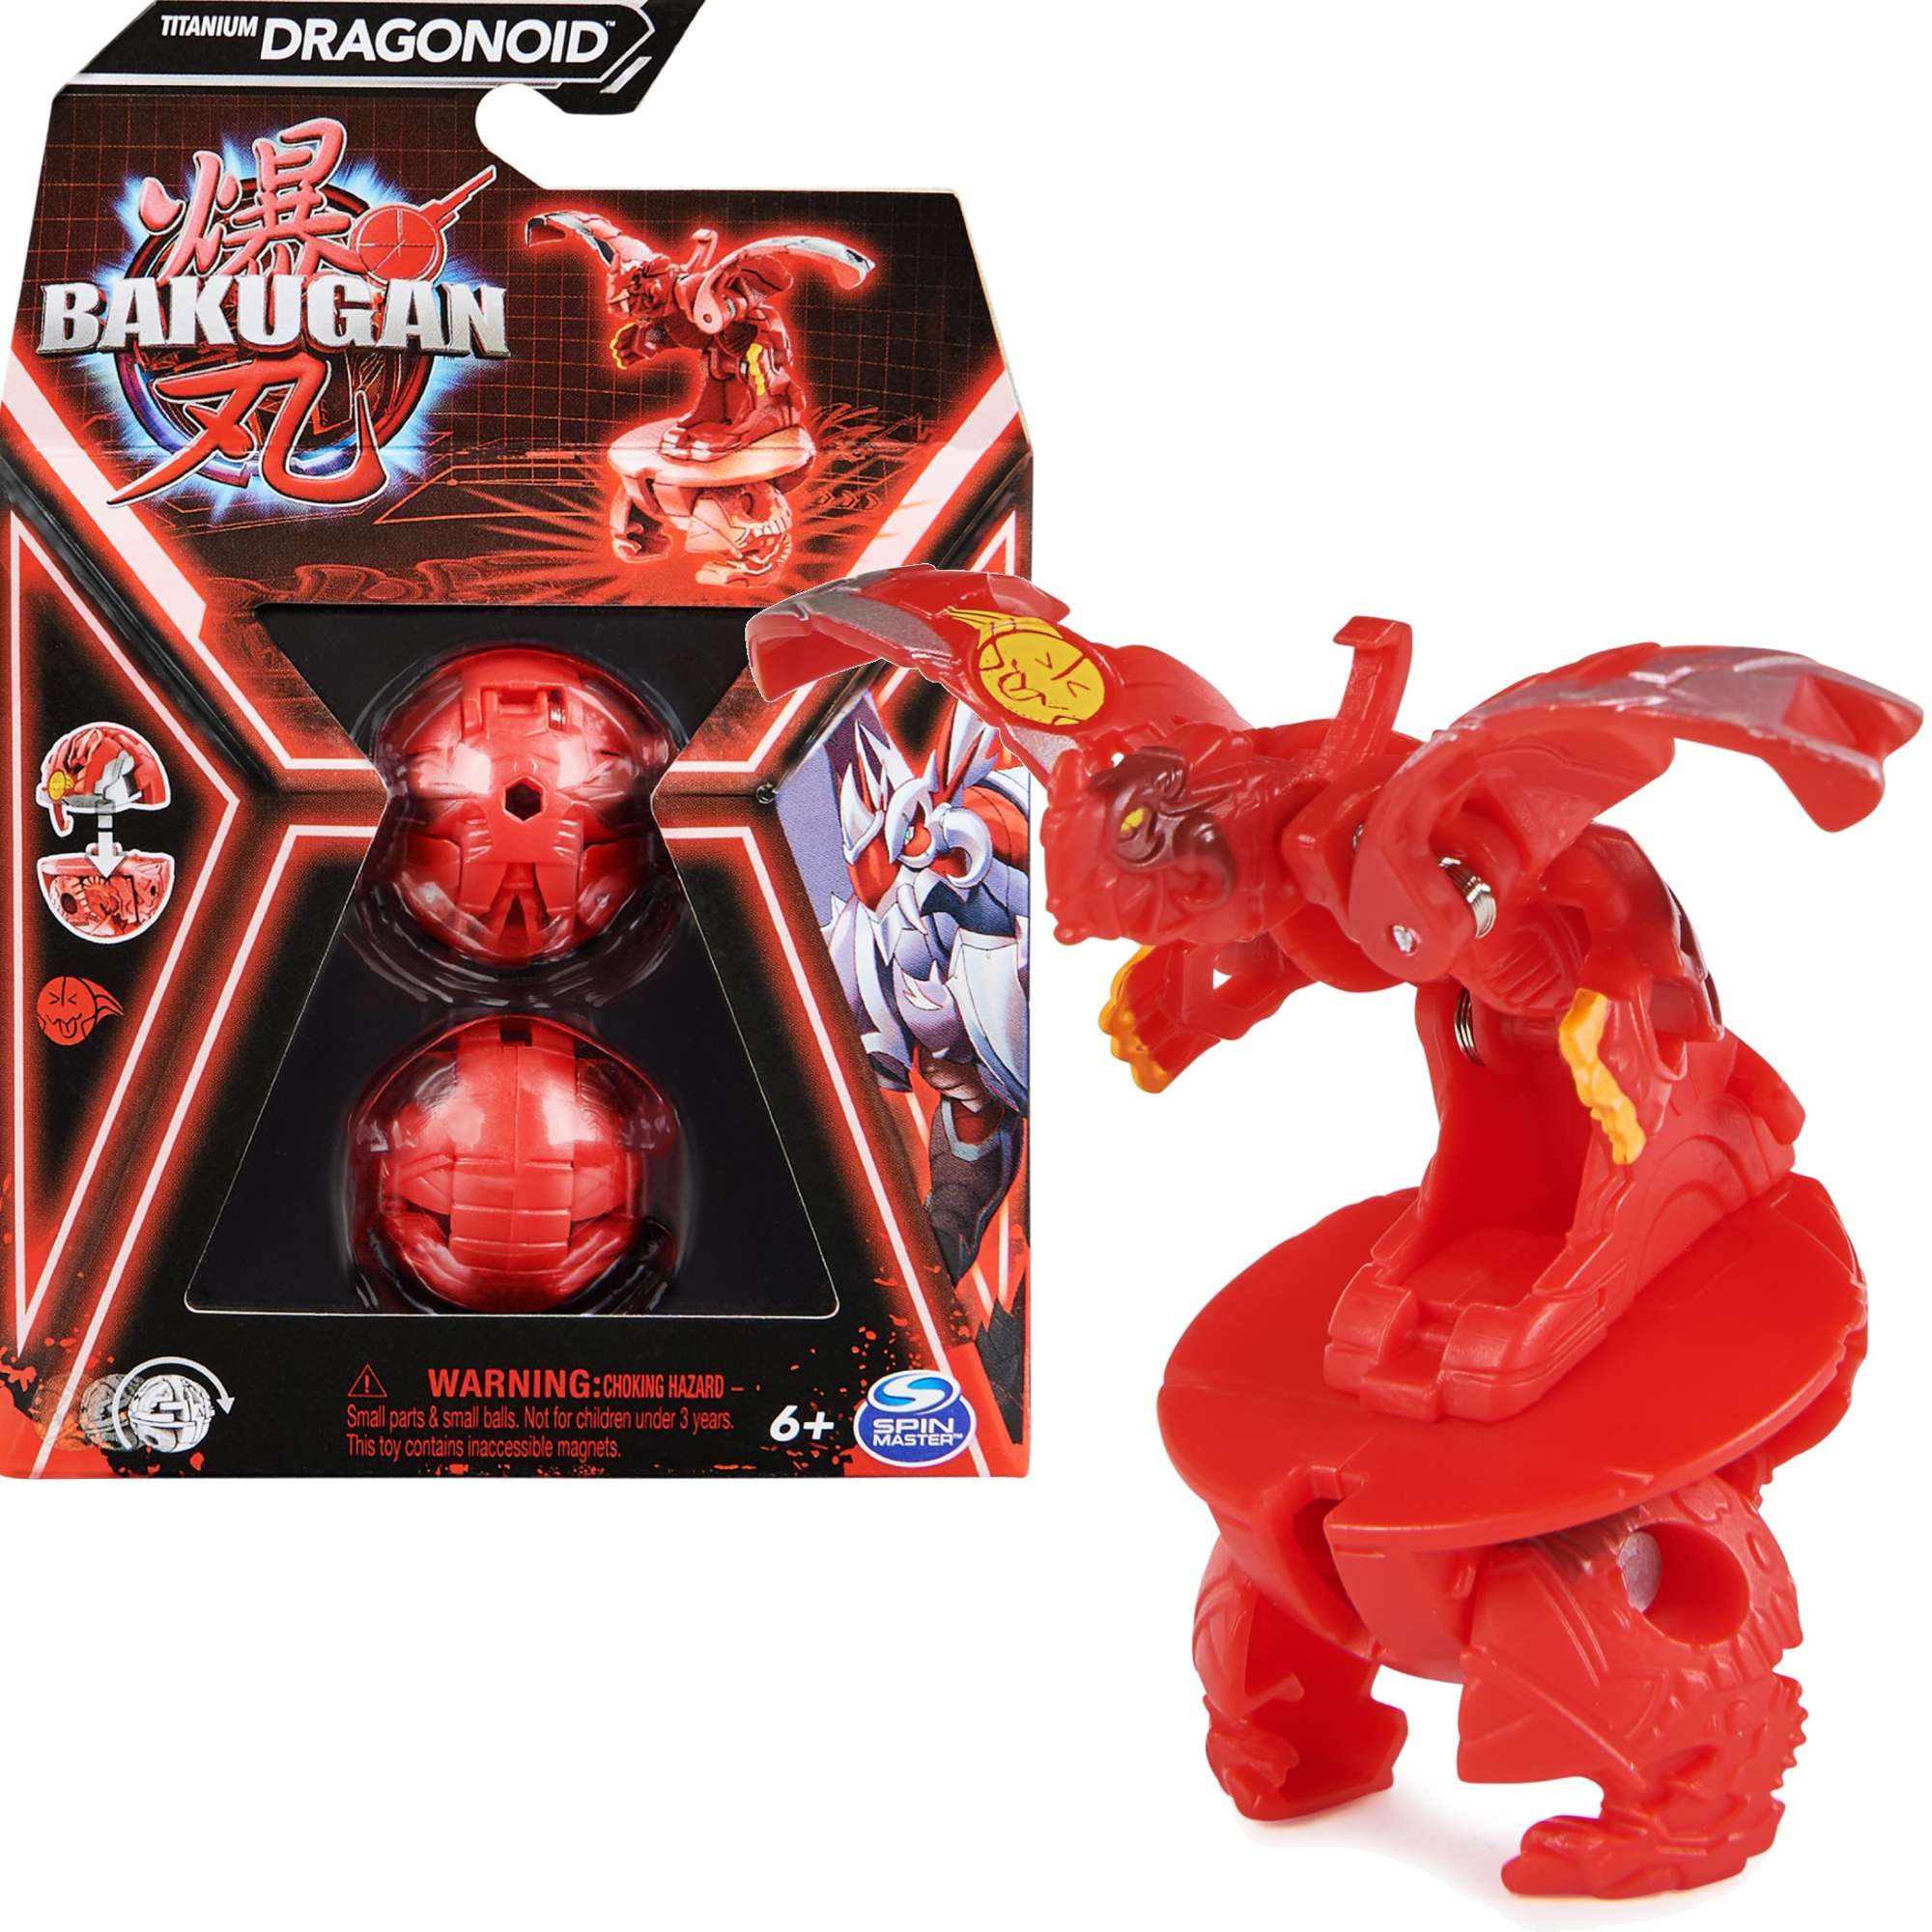 Bakugan Titanium Dragonoid Czerwona figurka bitewna transformujca + karty